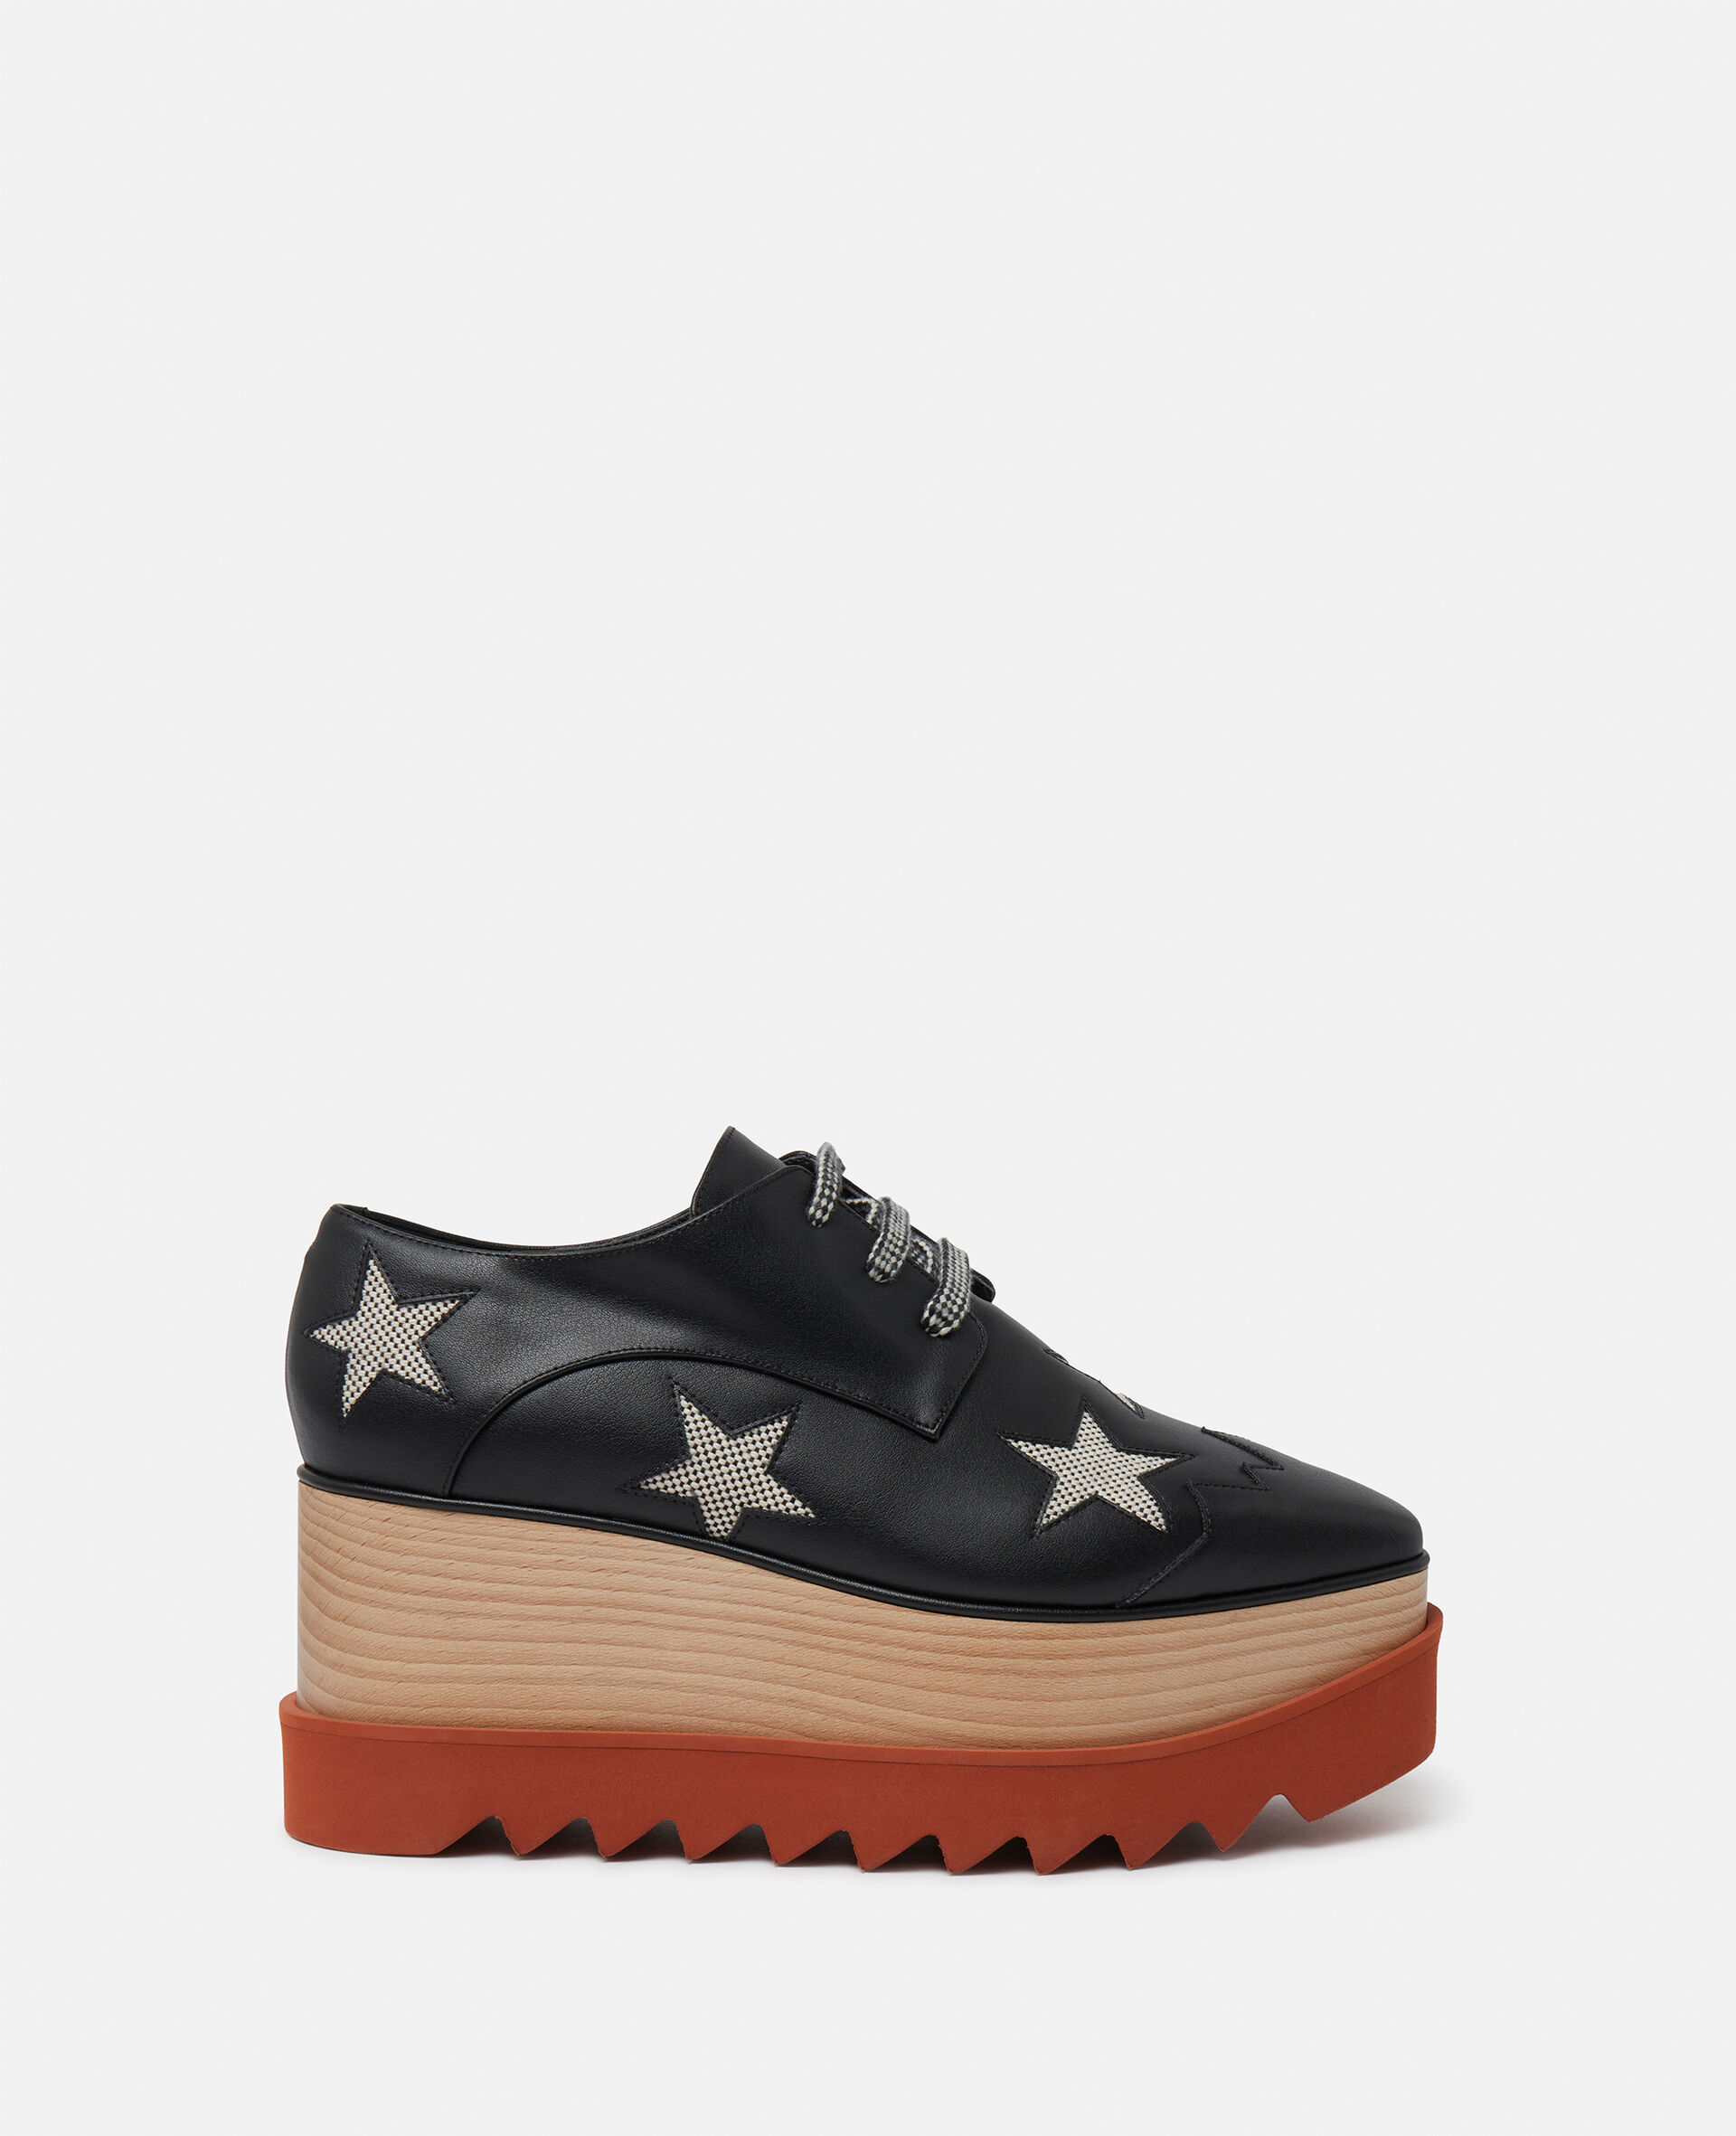 Elyse Stars Platform Shoes-Multicolour-medium